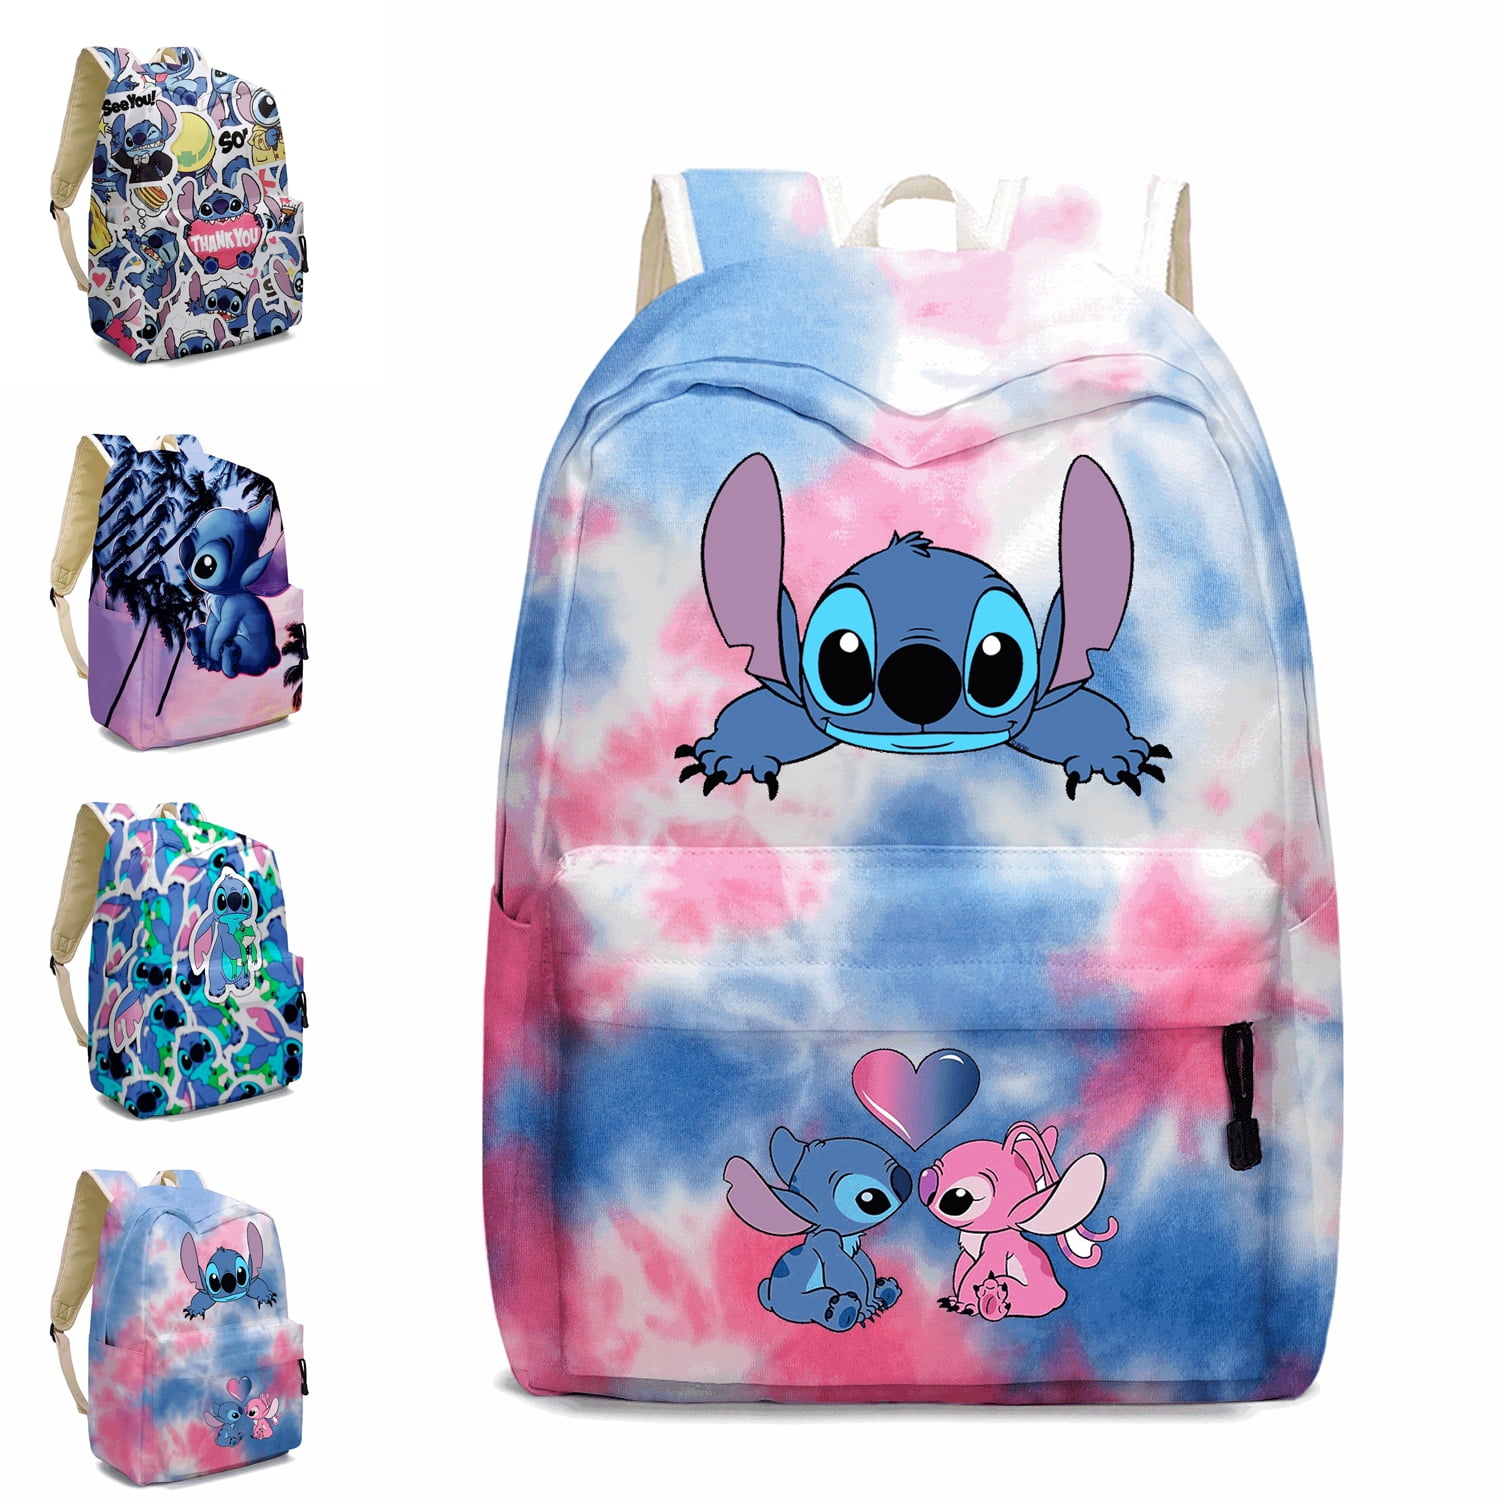 school stitch backpack